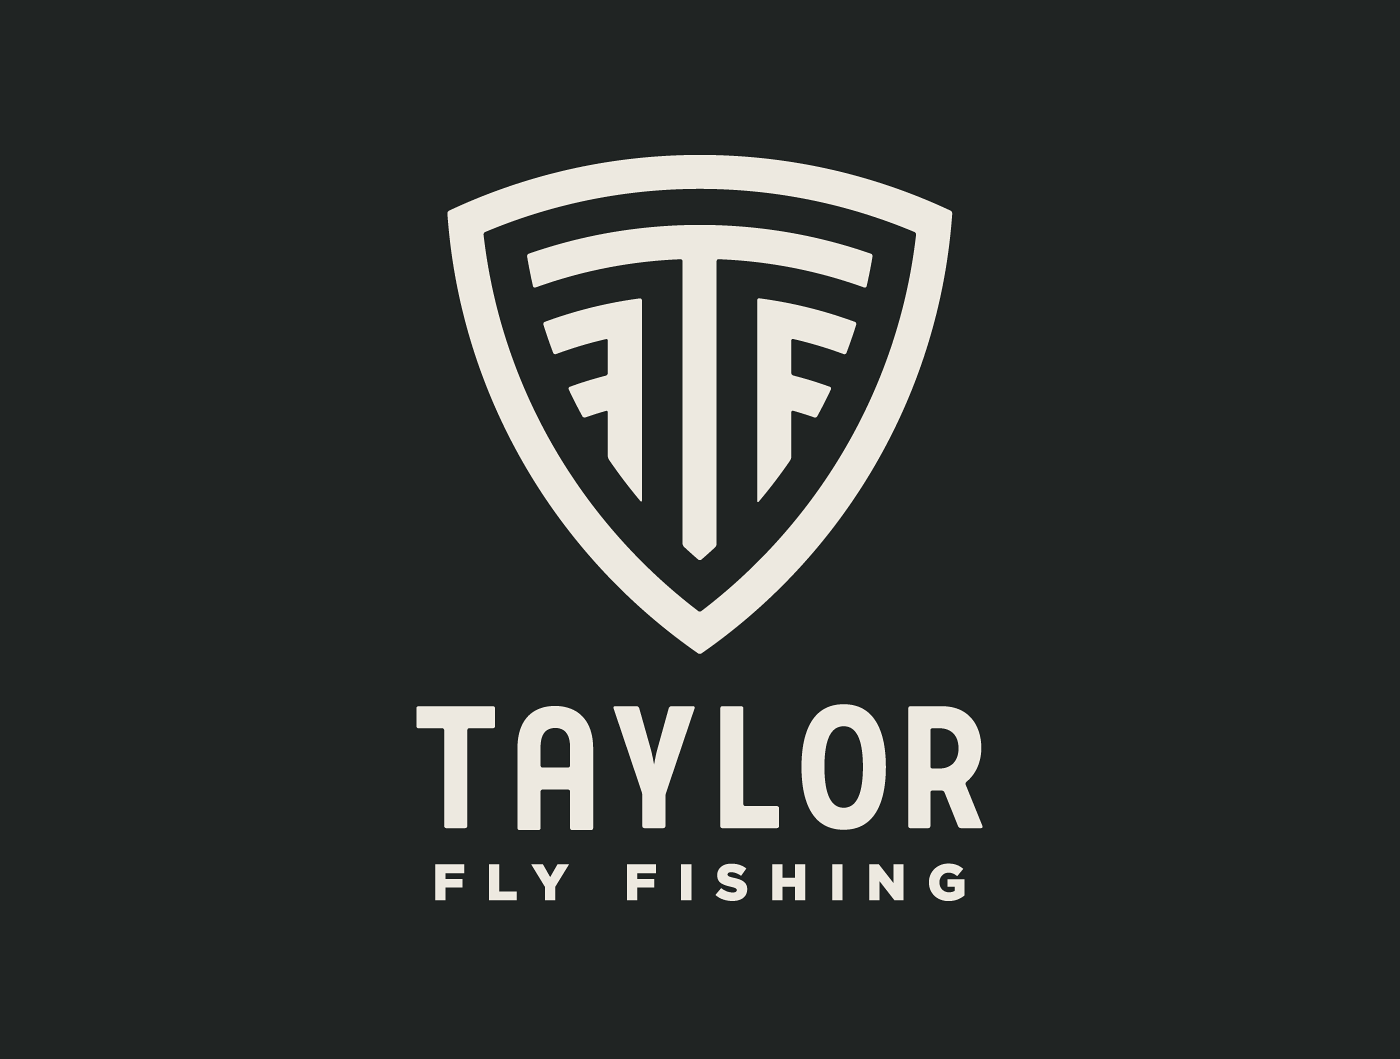 Taylor Fly Fishing logo